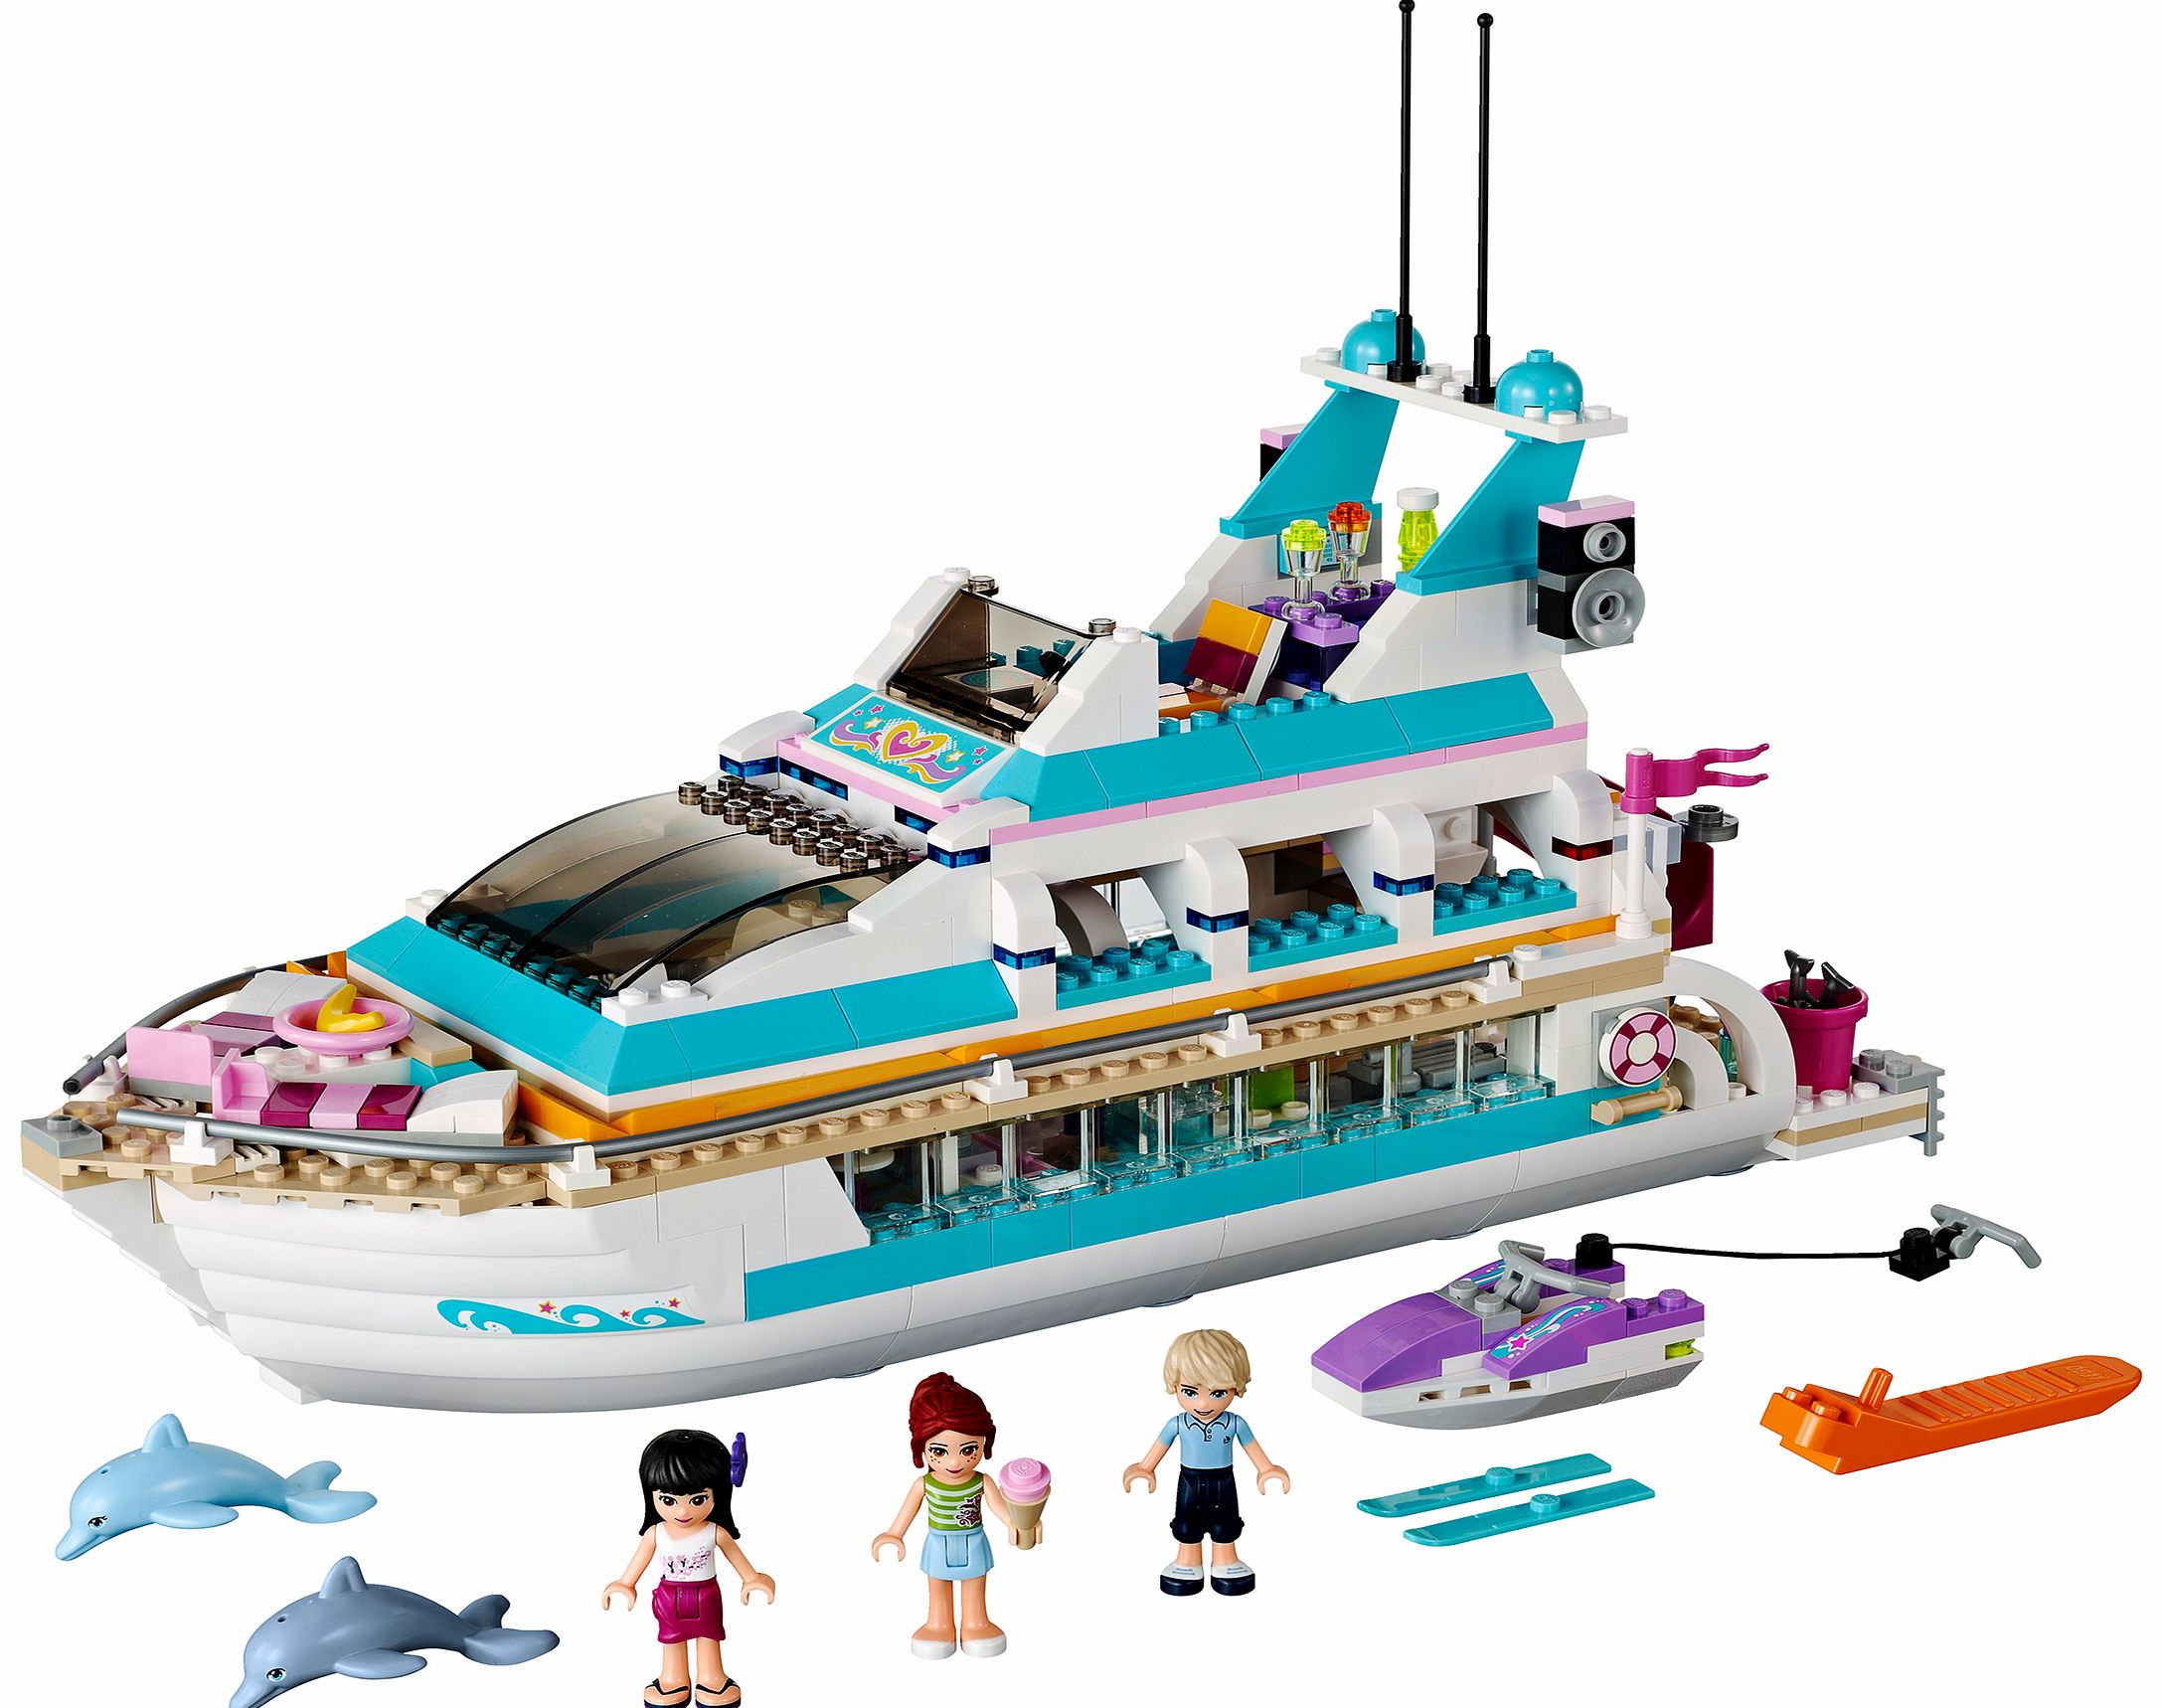 Lego Friends Dolphin Cruiser 41015